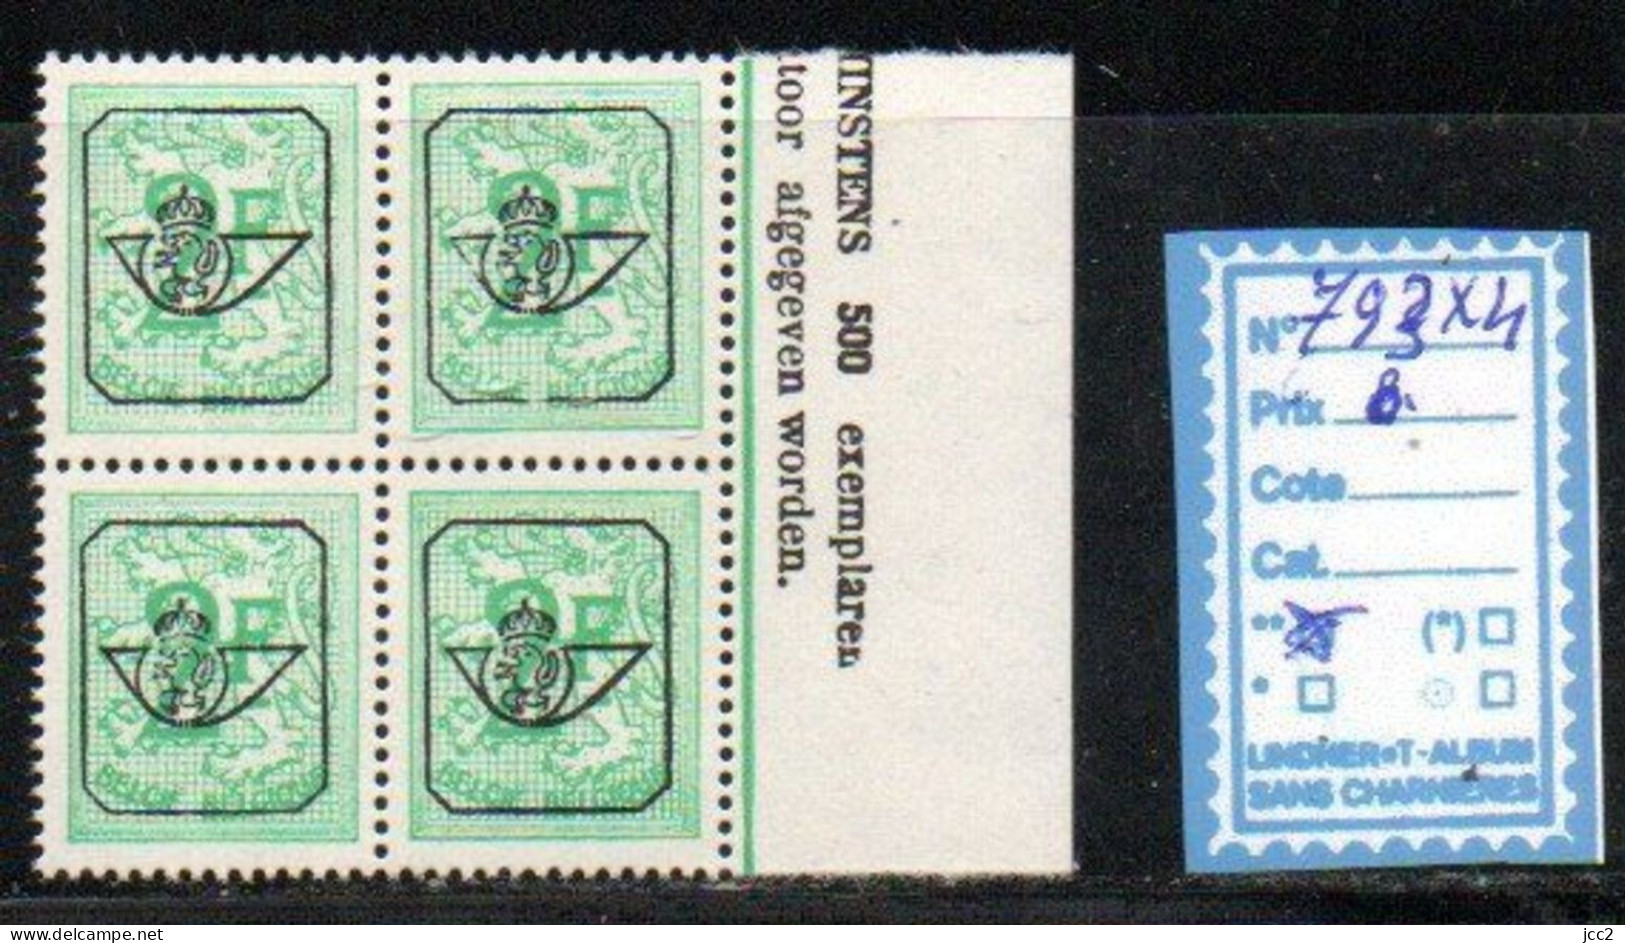 Préoblitéré 793X4 - Typo Precancels 1967-85 (New Numerals)